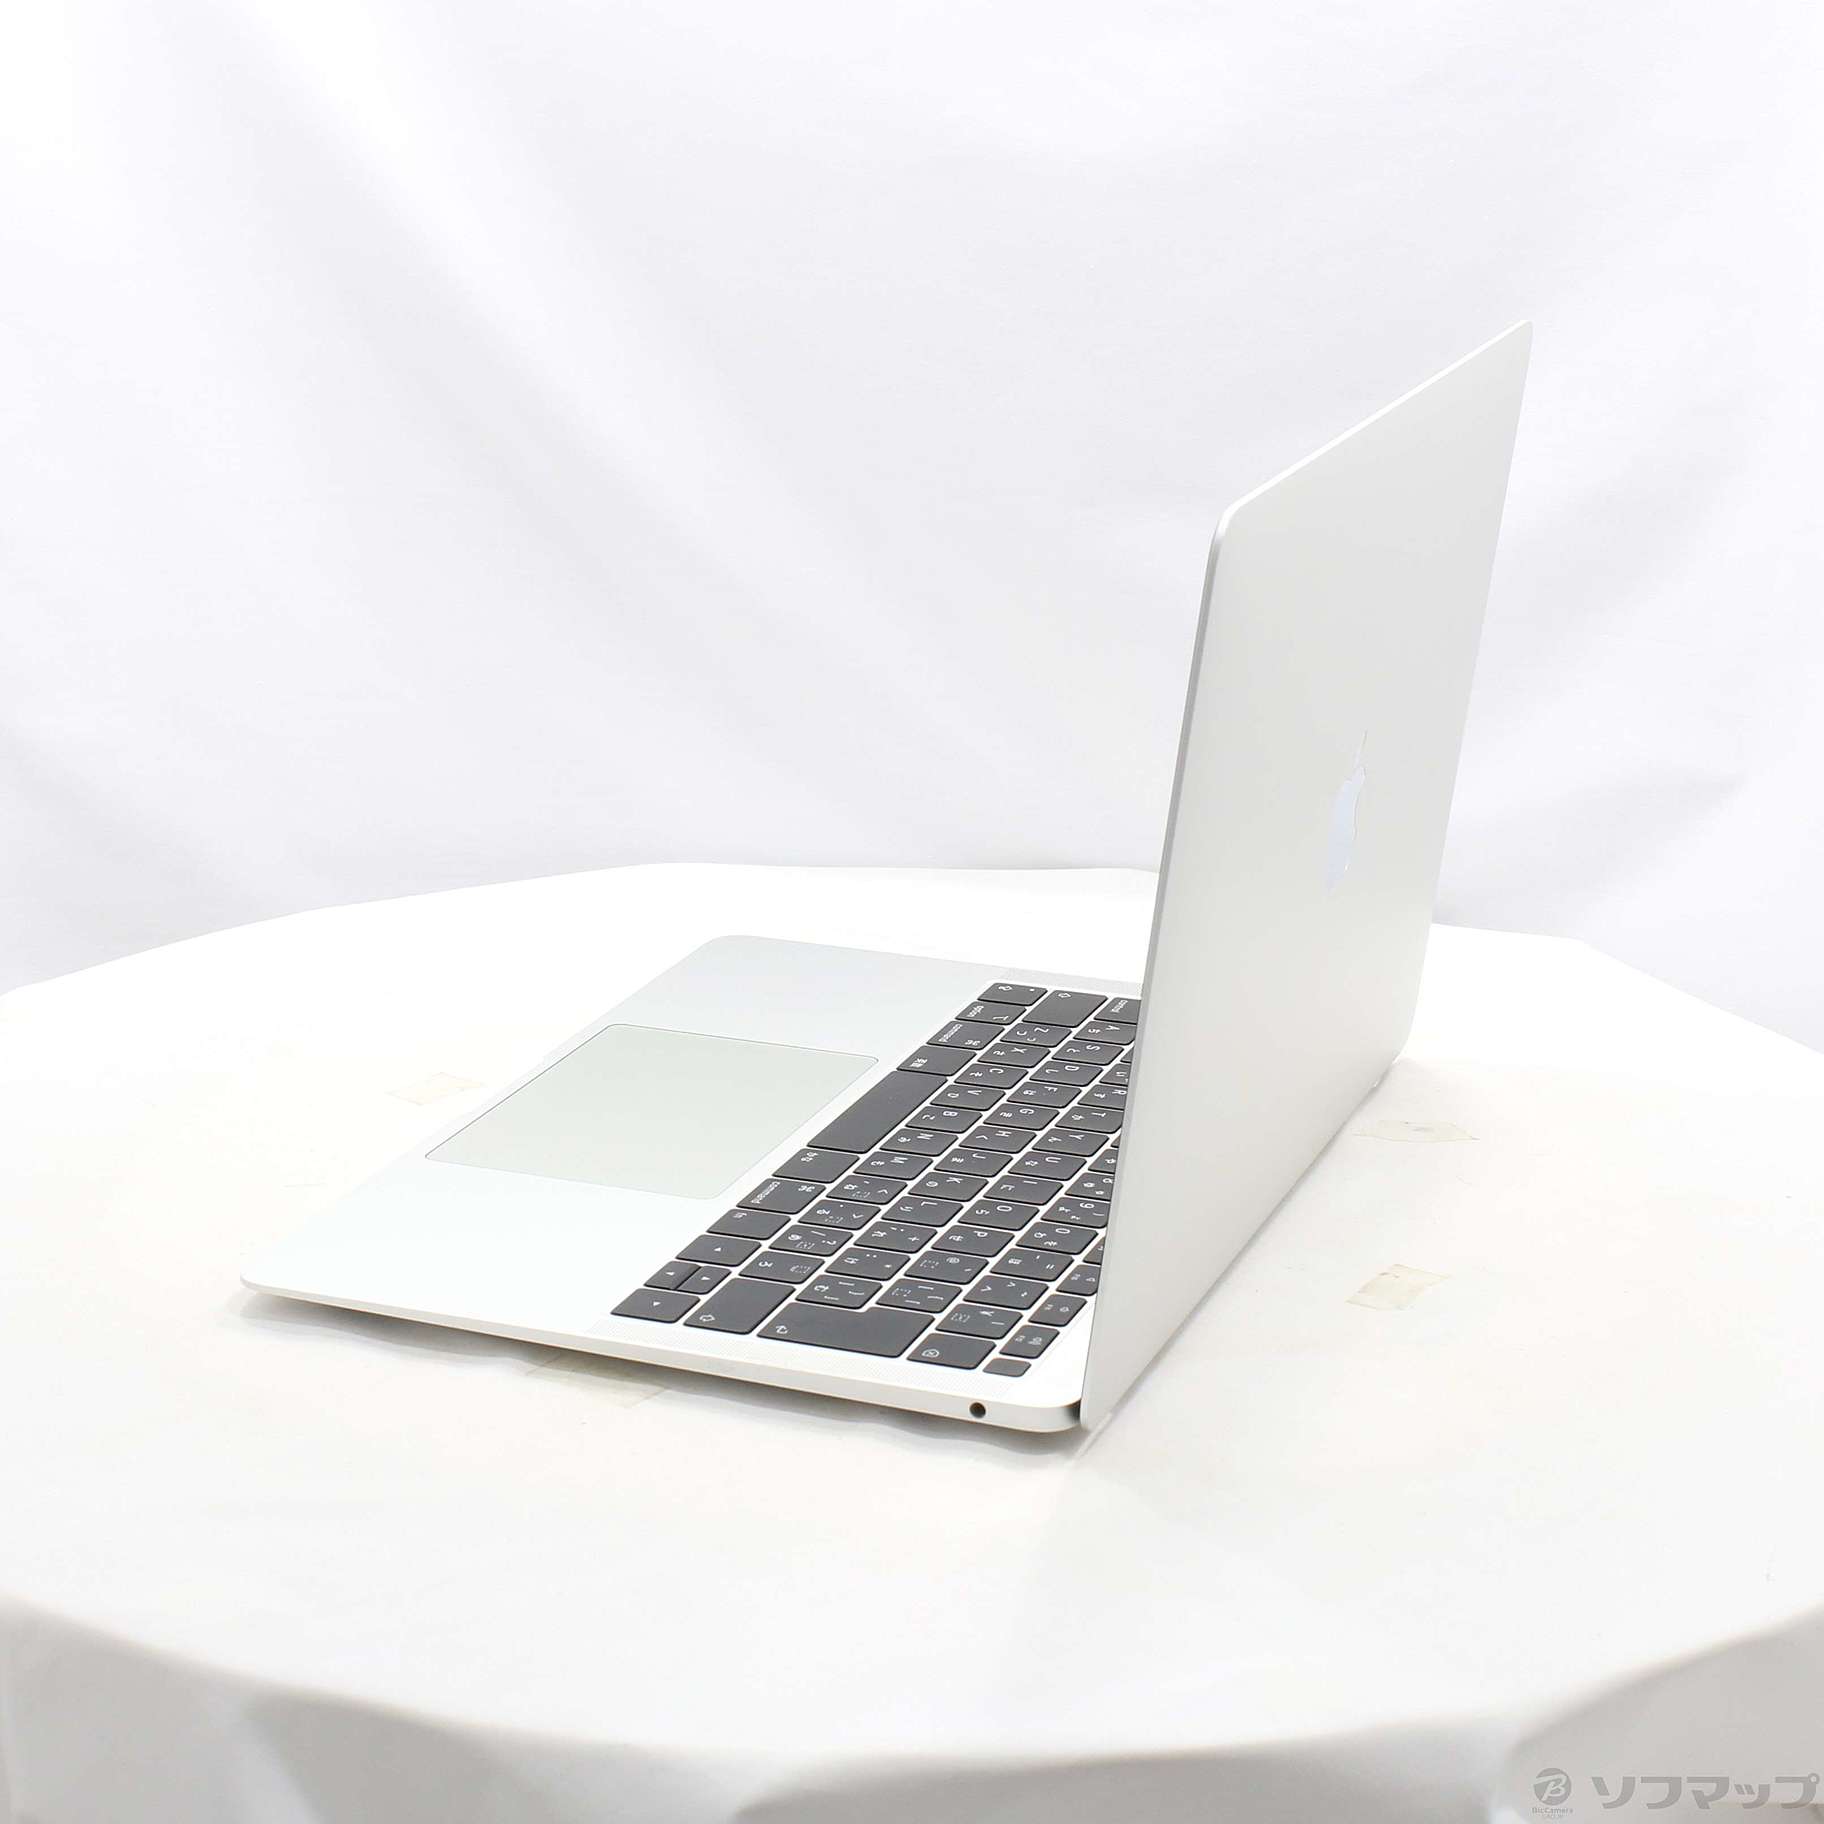 Apple - 未開封 Apple MacBook Air MVFK2J/A 13.3inch の+spbgp44.ru